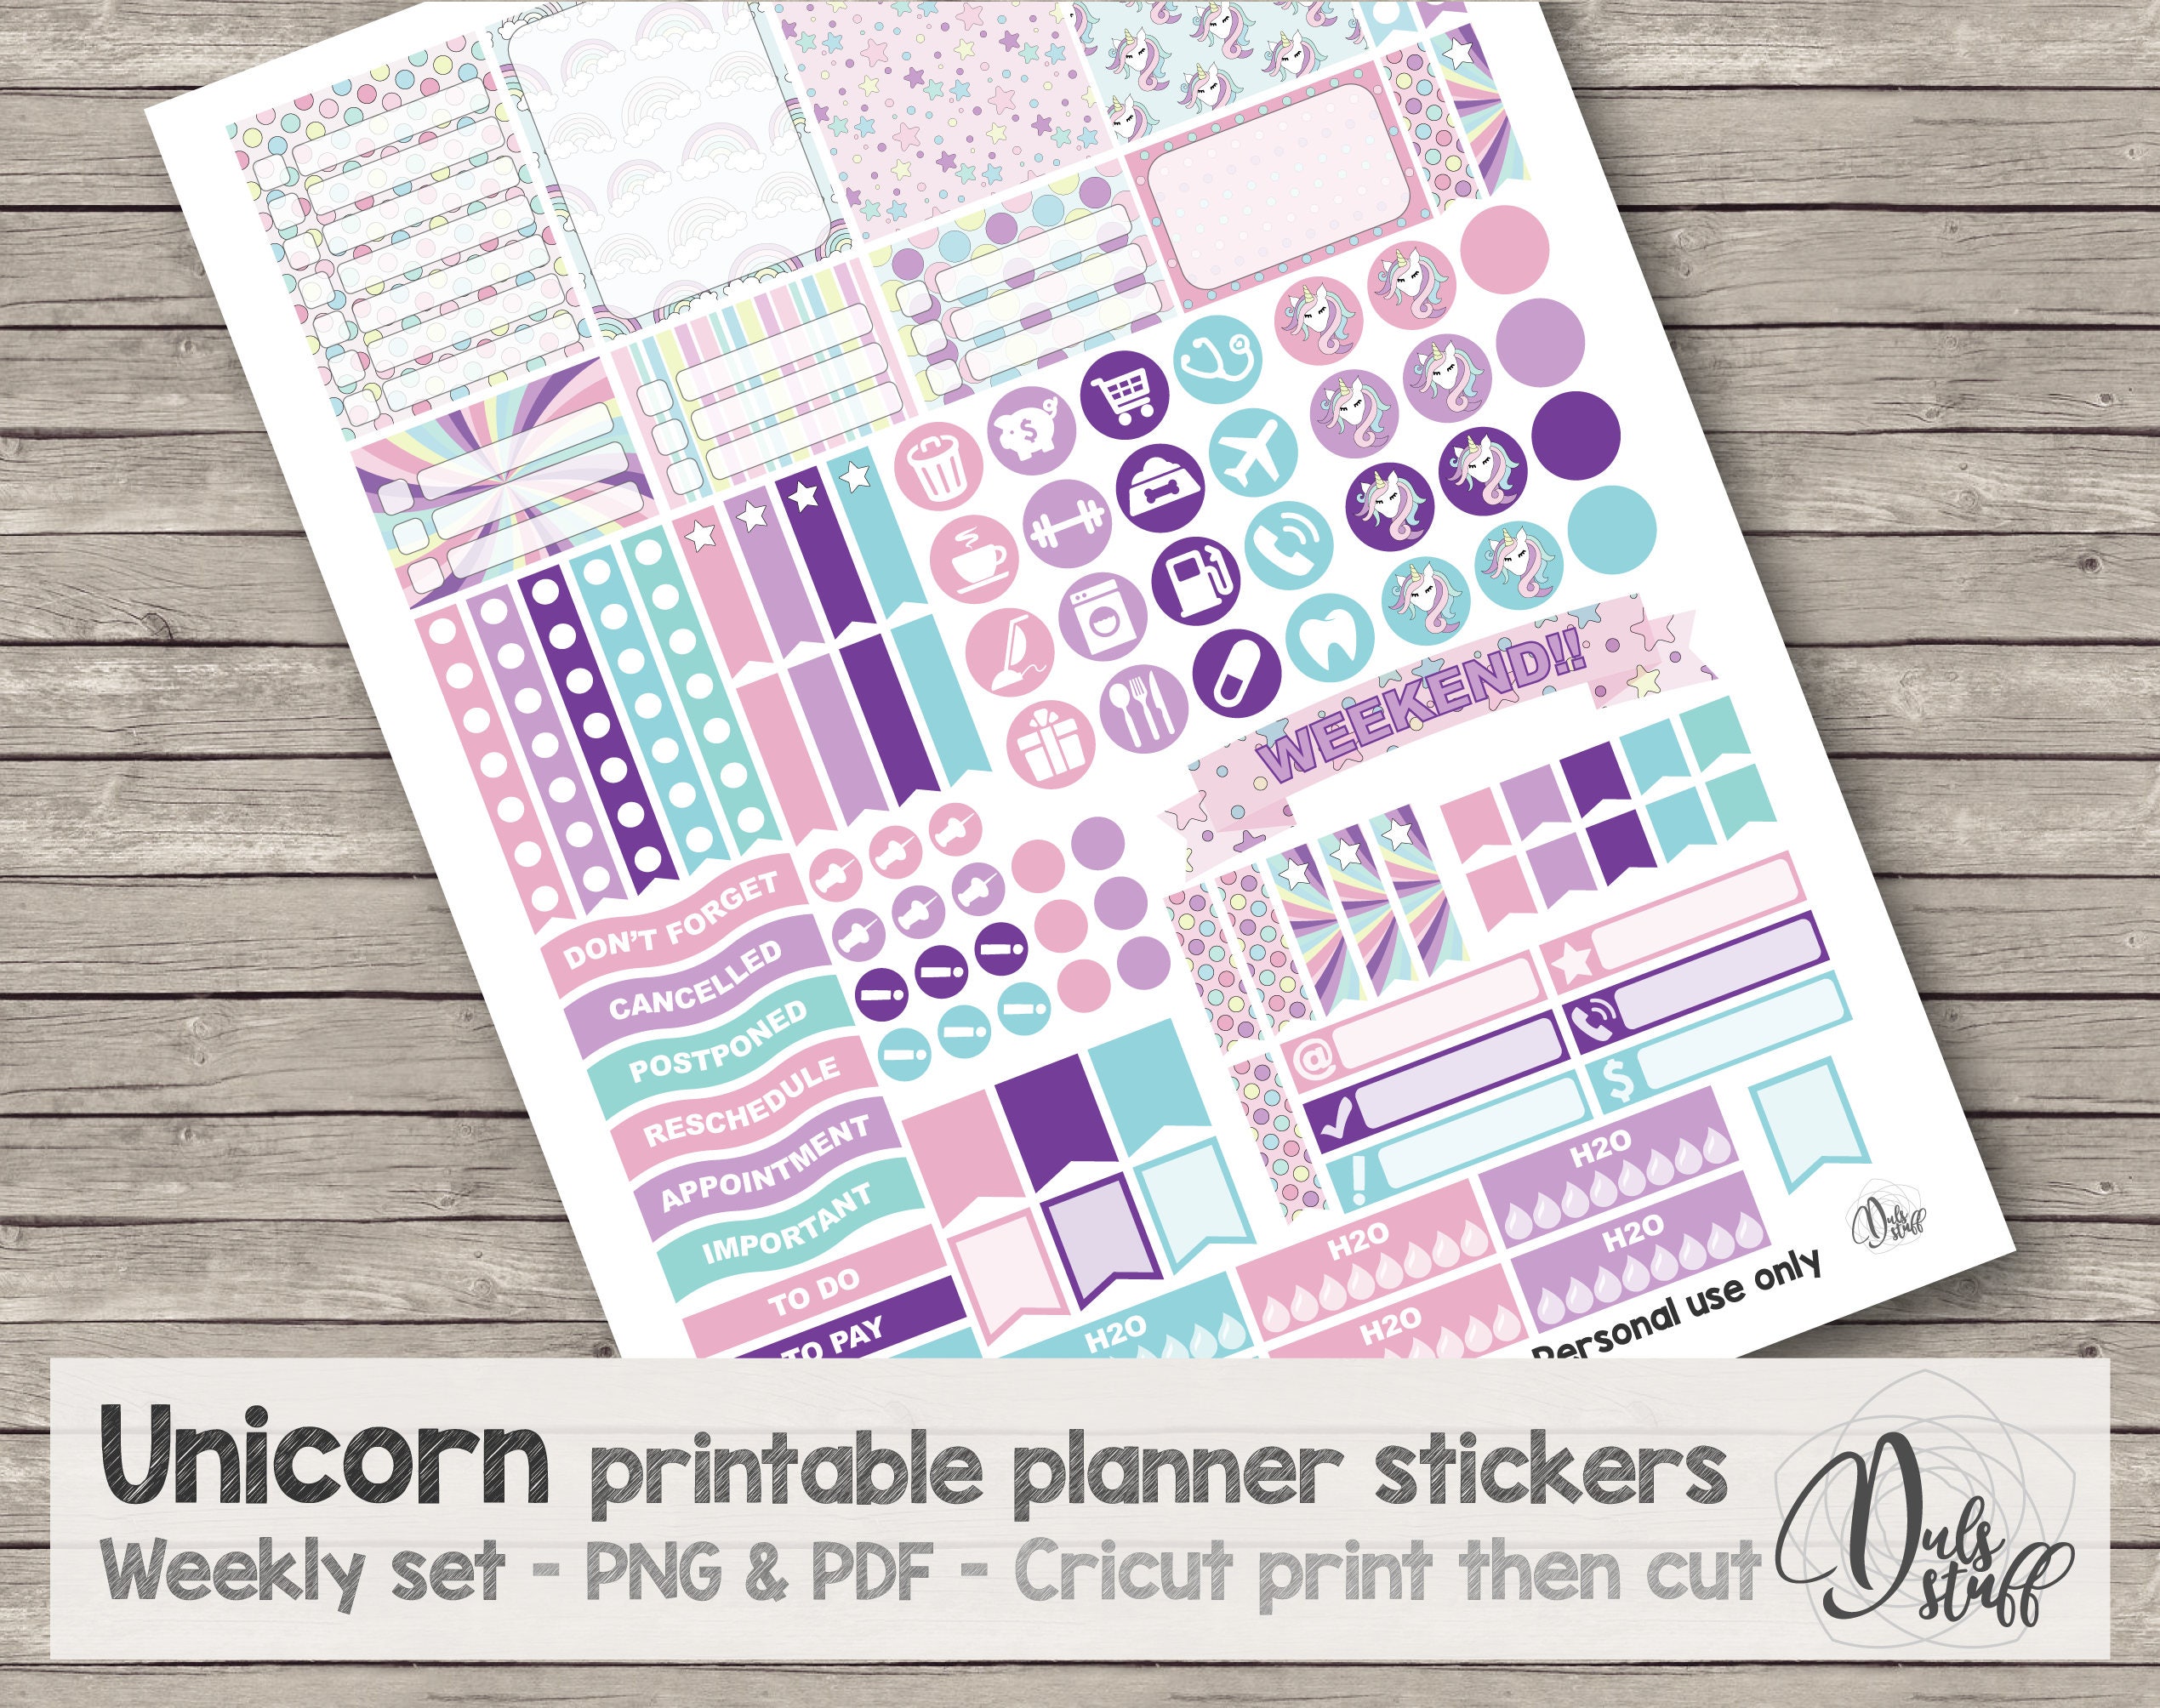 Digital planner stickers, printable stickers, happy planner, unicorn  stickers, weekly stickers, cricut cut, pink purple scrapbook stickers